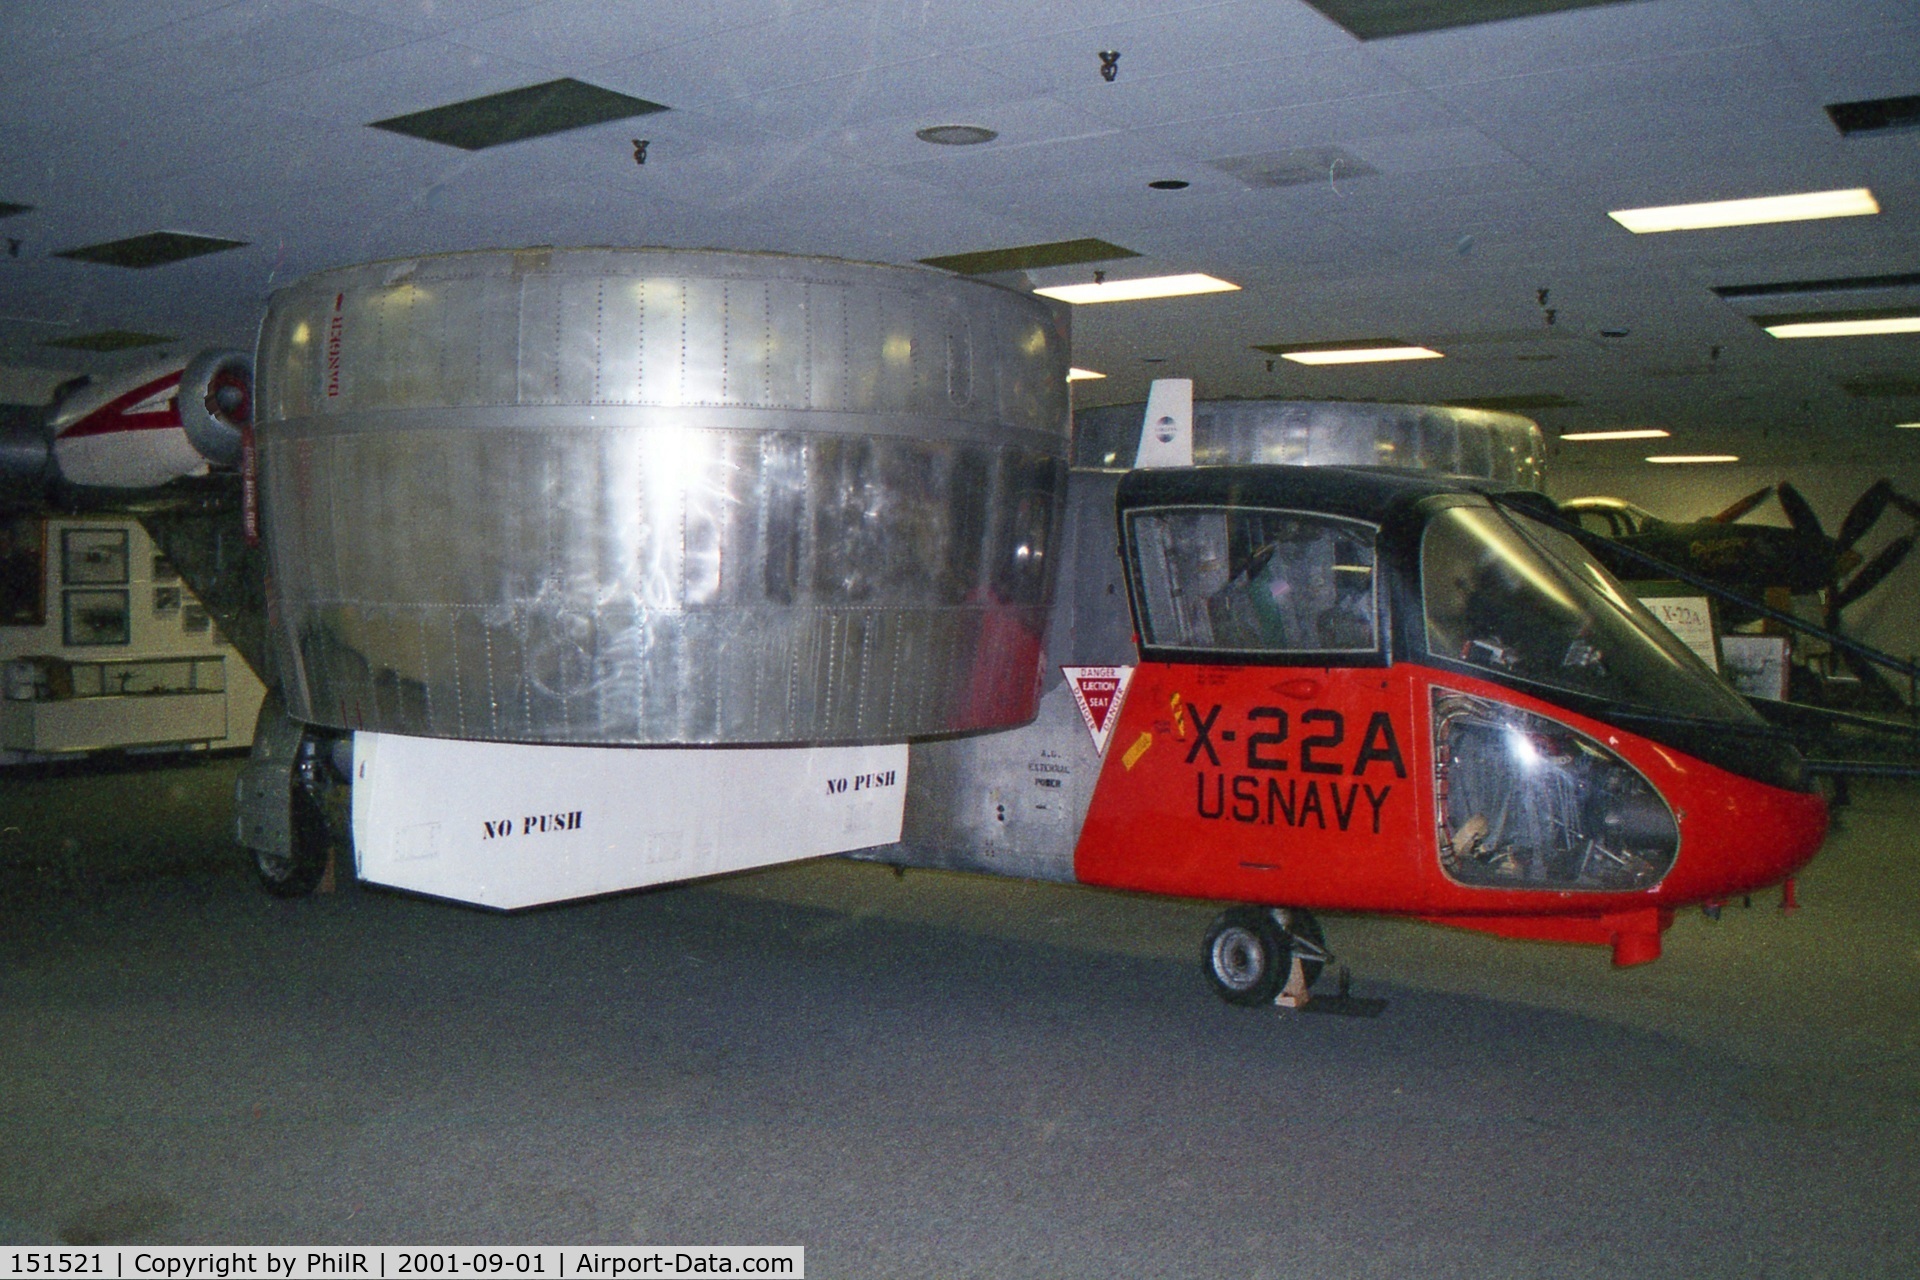 151521, 1966 Bell X-22A C/N 151521, 151521 1966 Bell X-22A USN Niagara Aerospace Museum